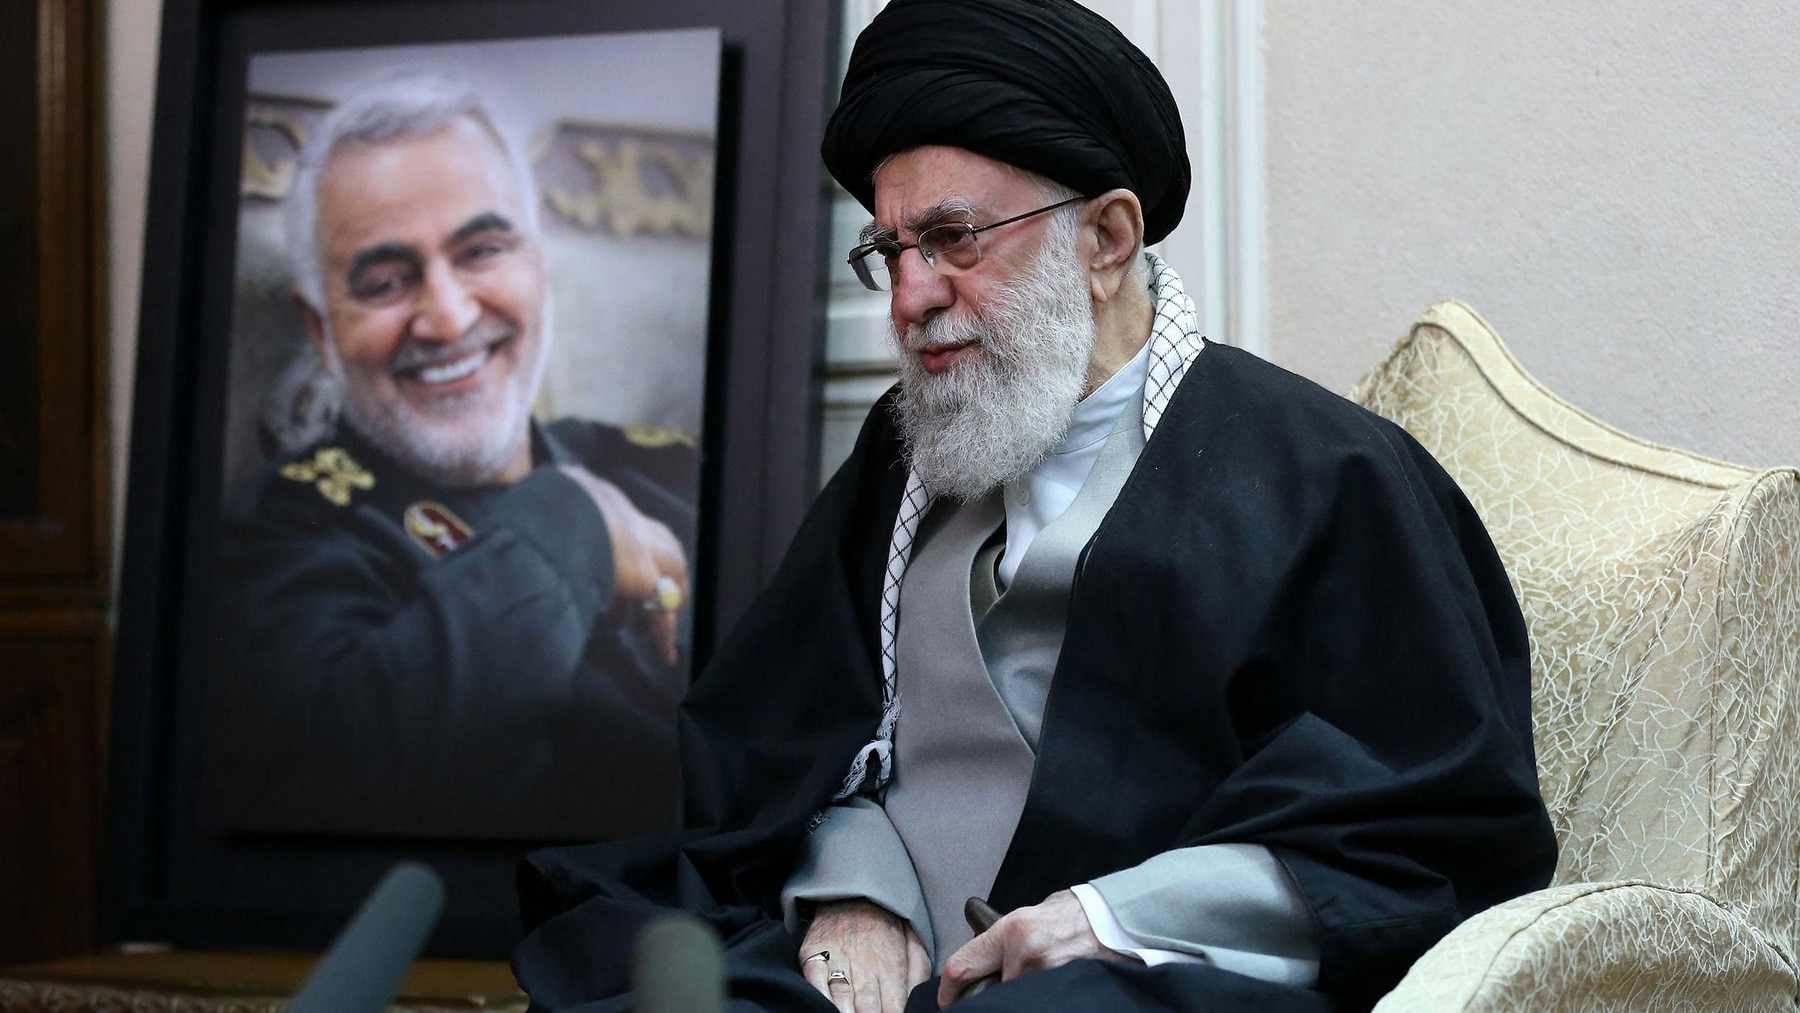 Iranian Revolution supreme leader Ali Khamenei pictured beside a portrait of Qasem Soleimani.